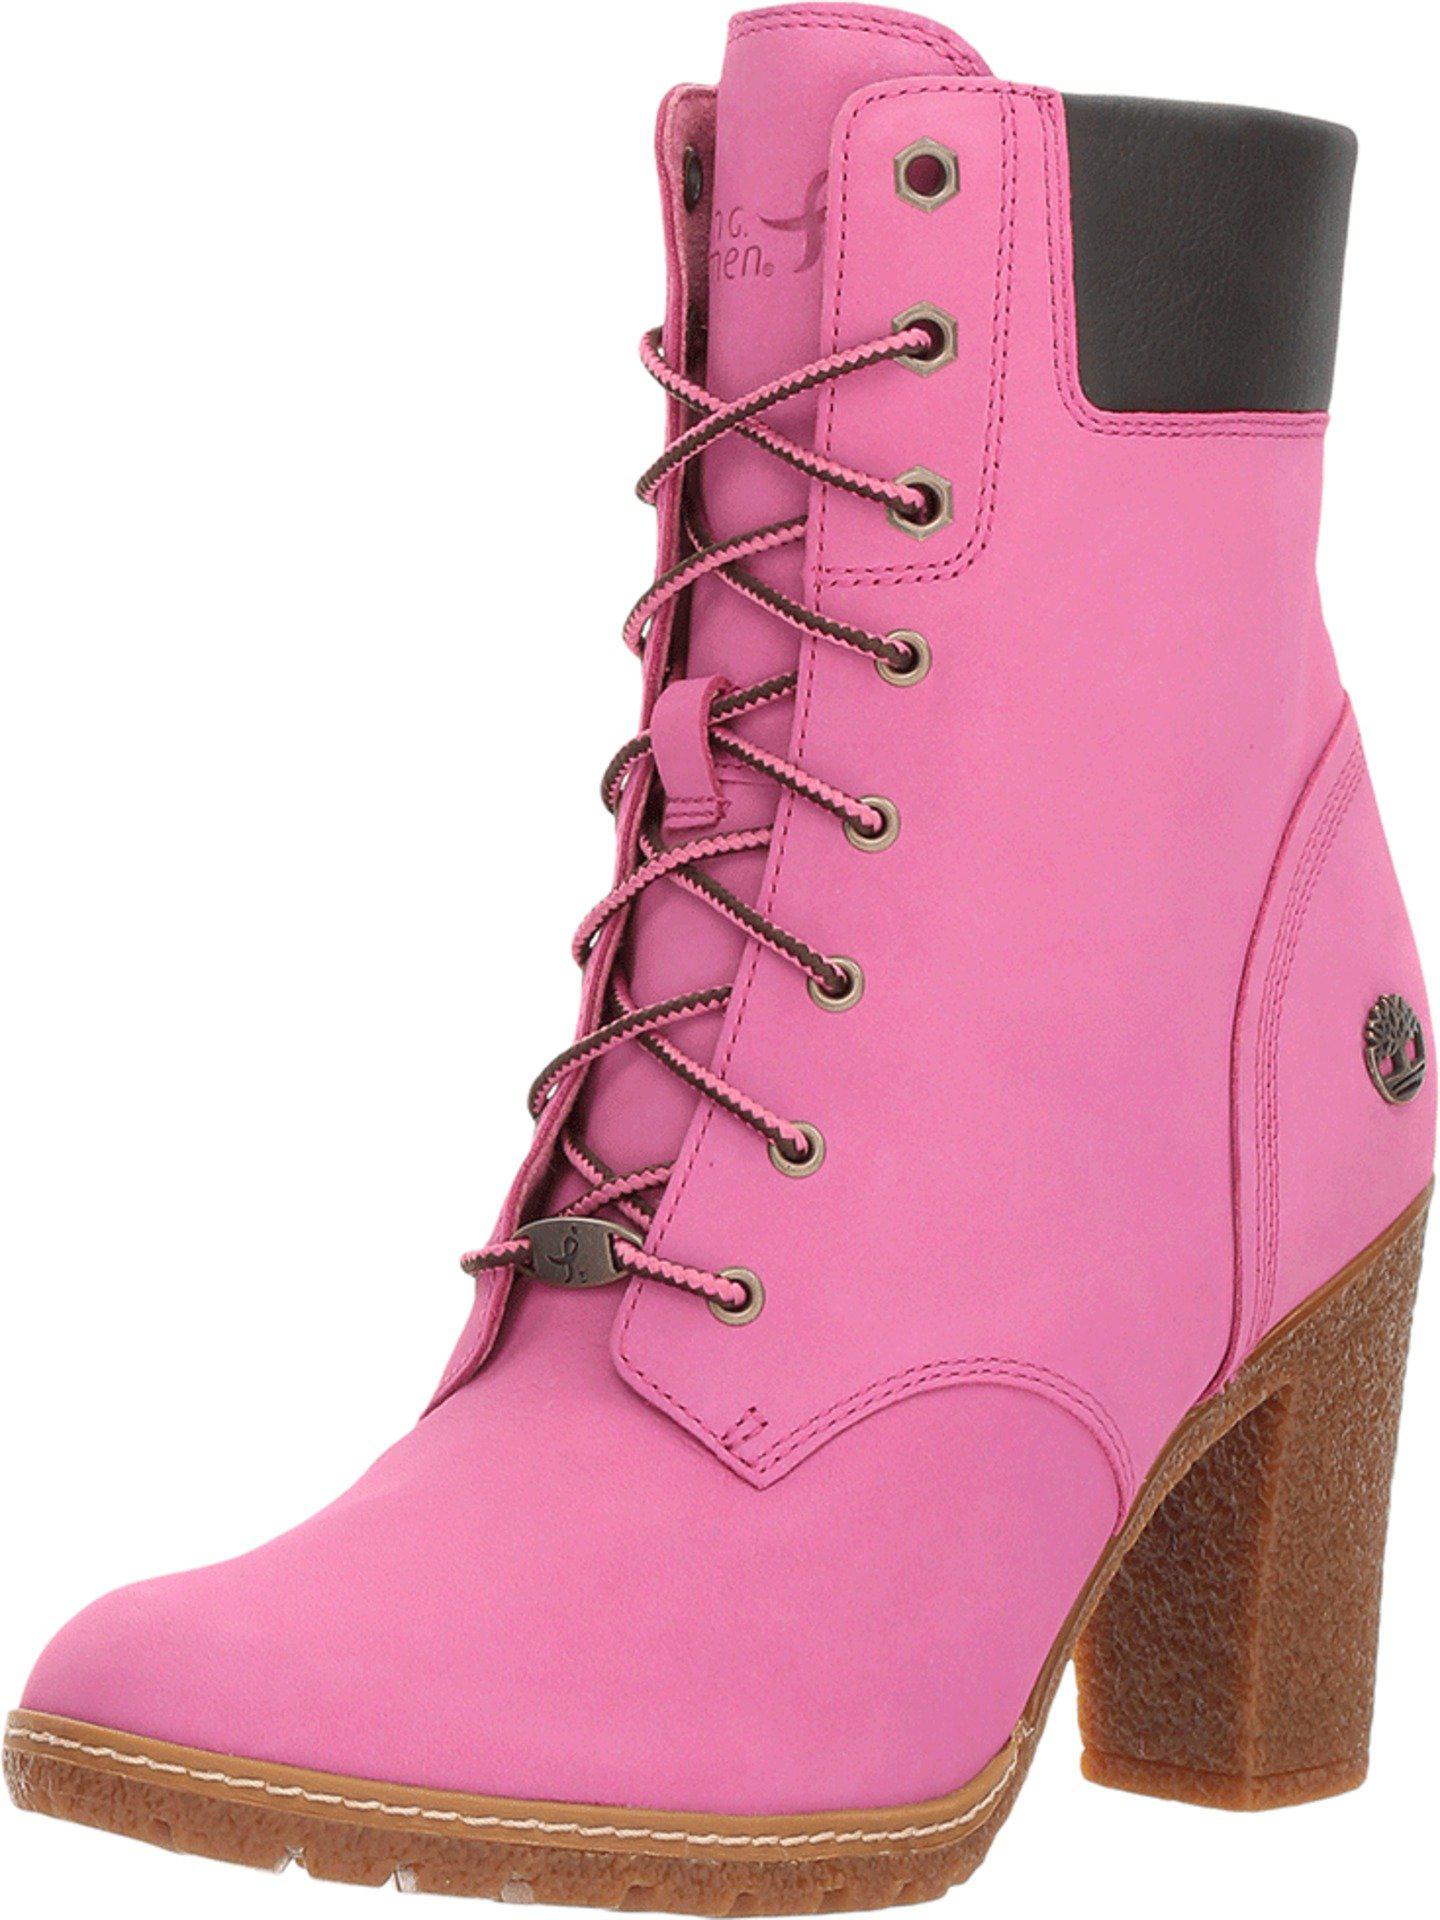 timberland heels pink